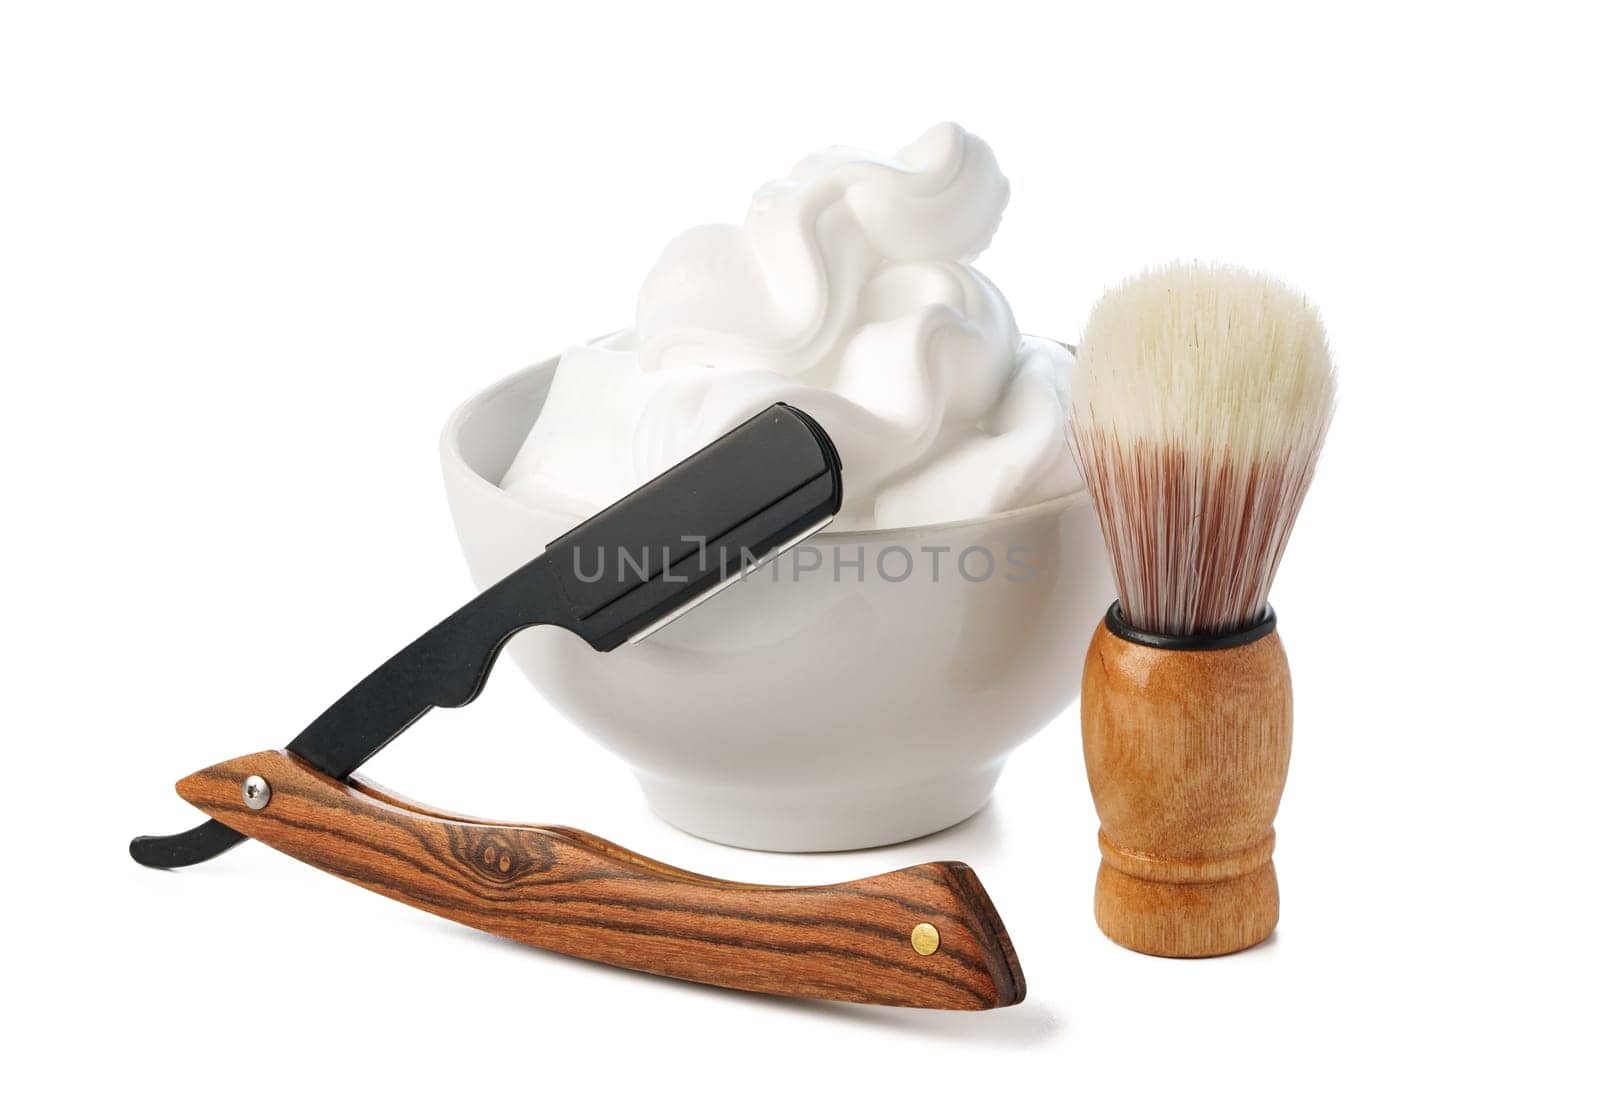 Vintage shaving razor and tools isolated on white by Fabrikasimf